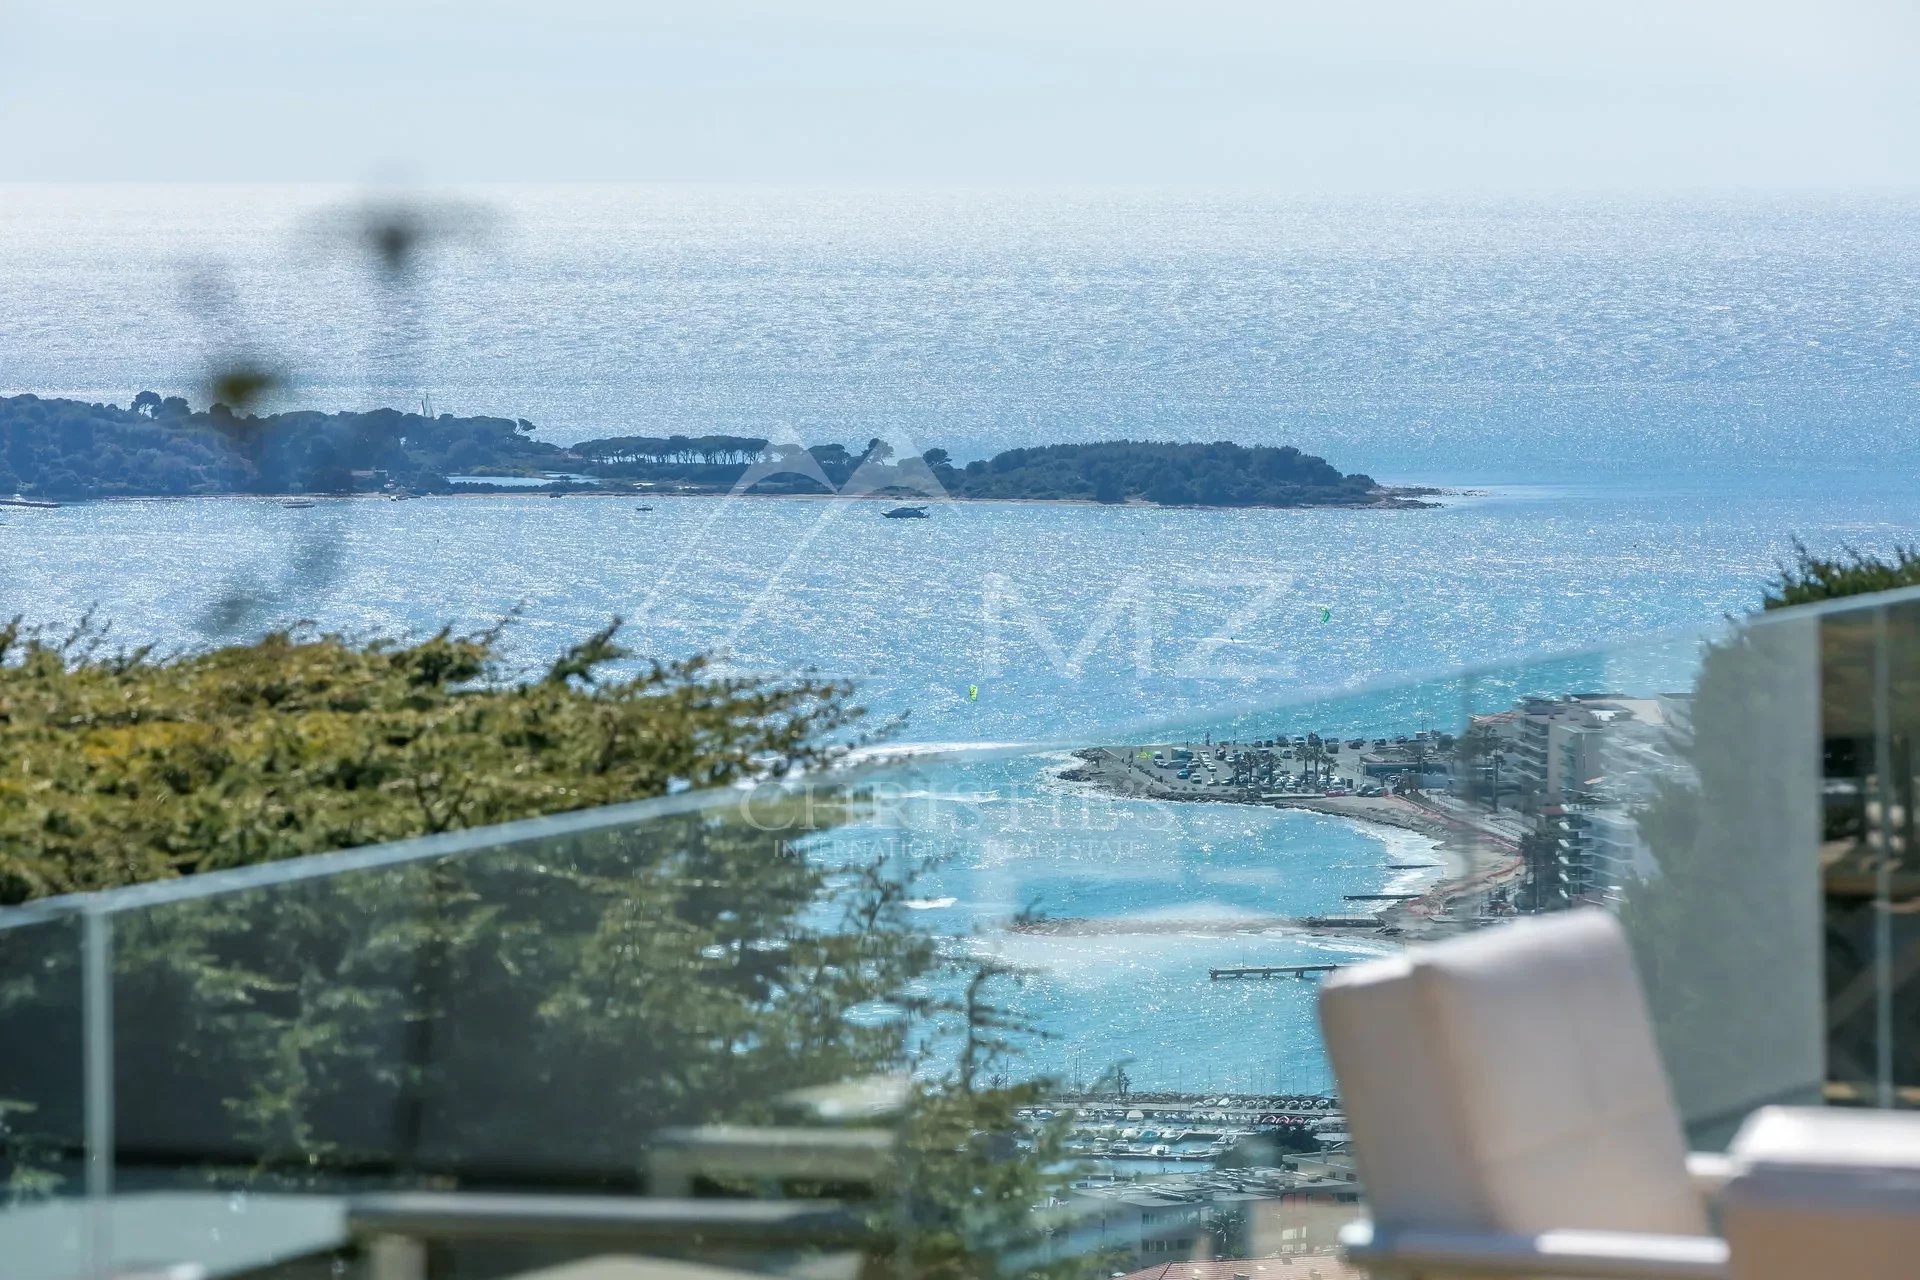 Cannes - Superb contemporary villa